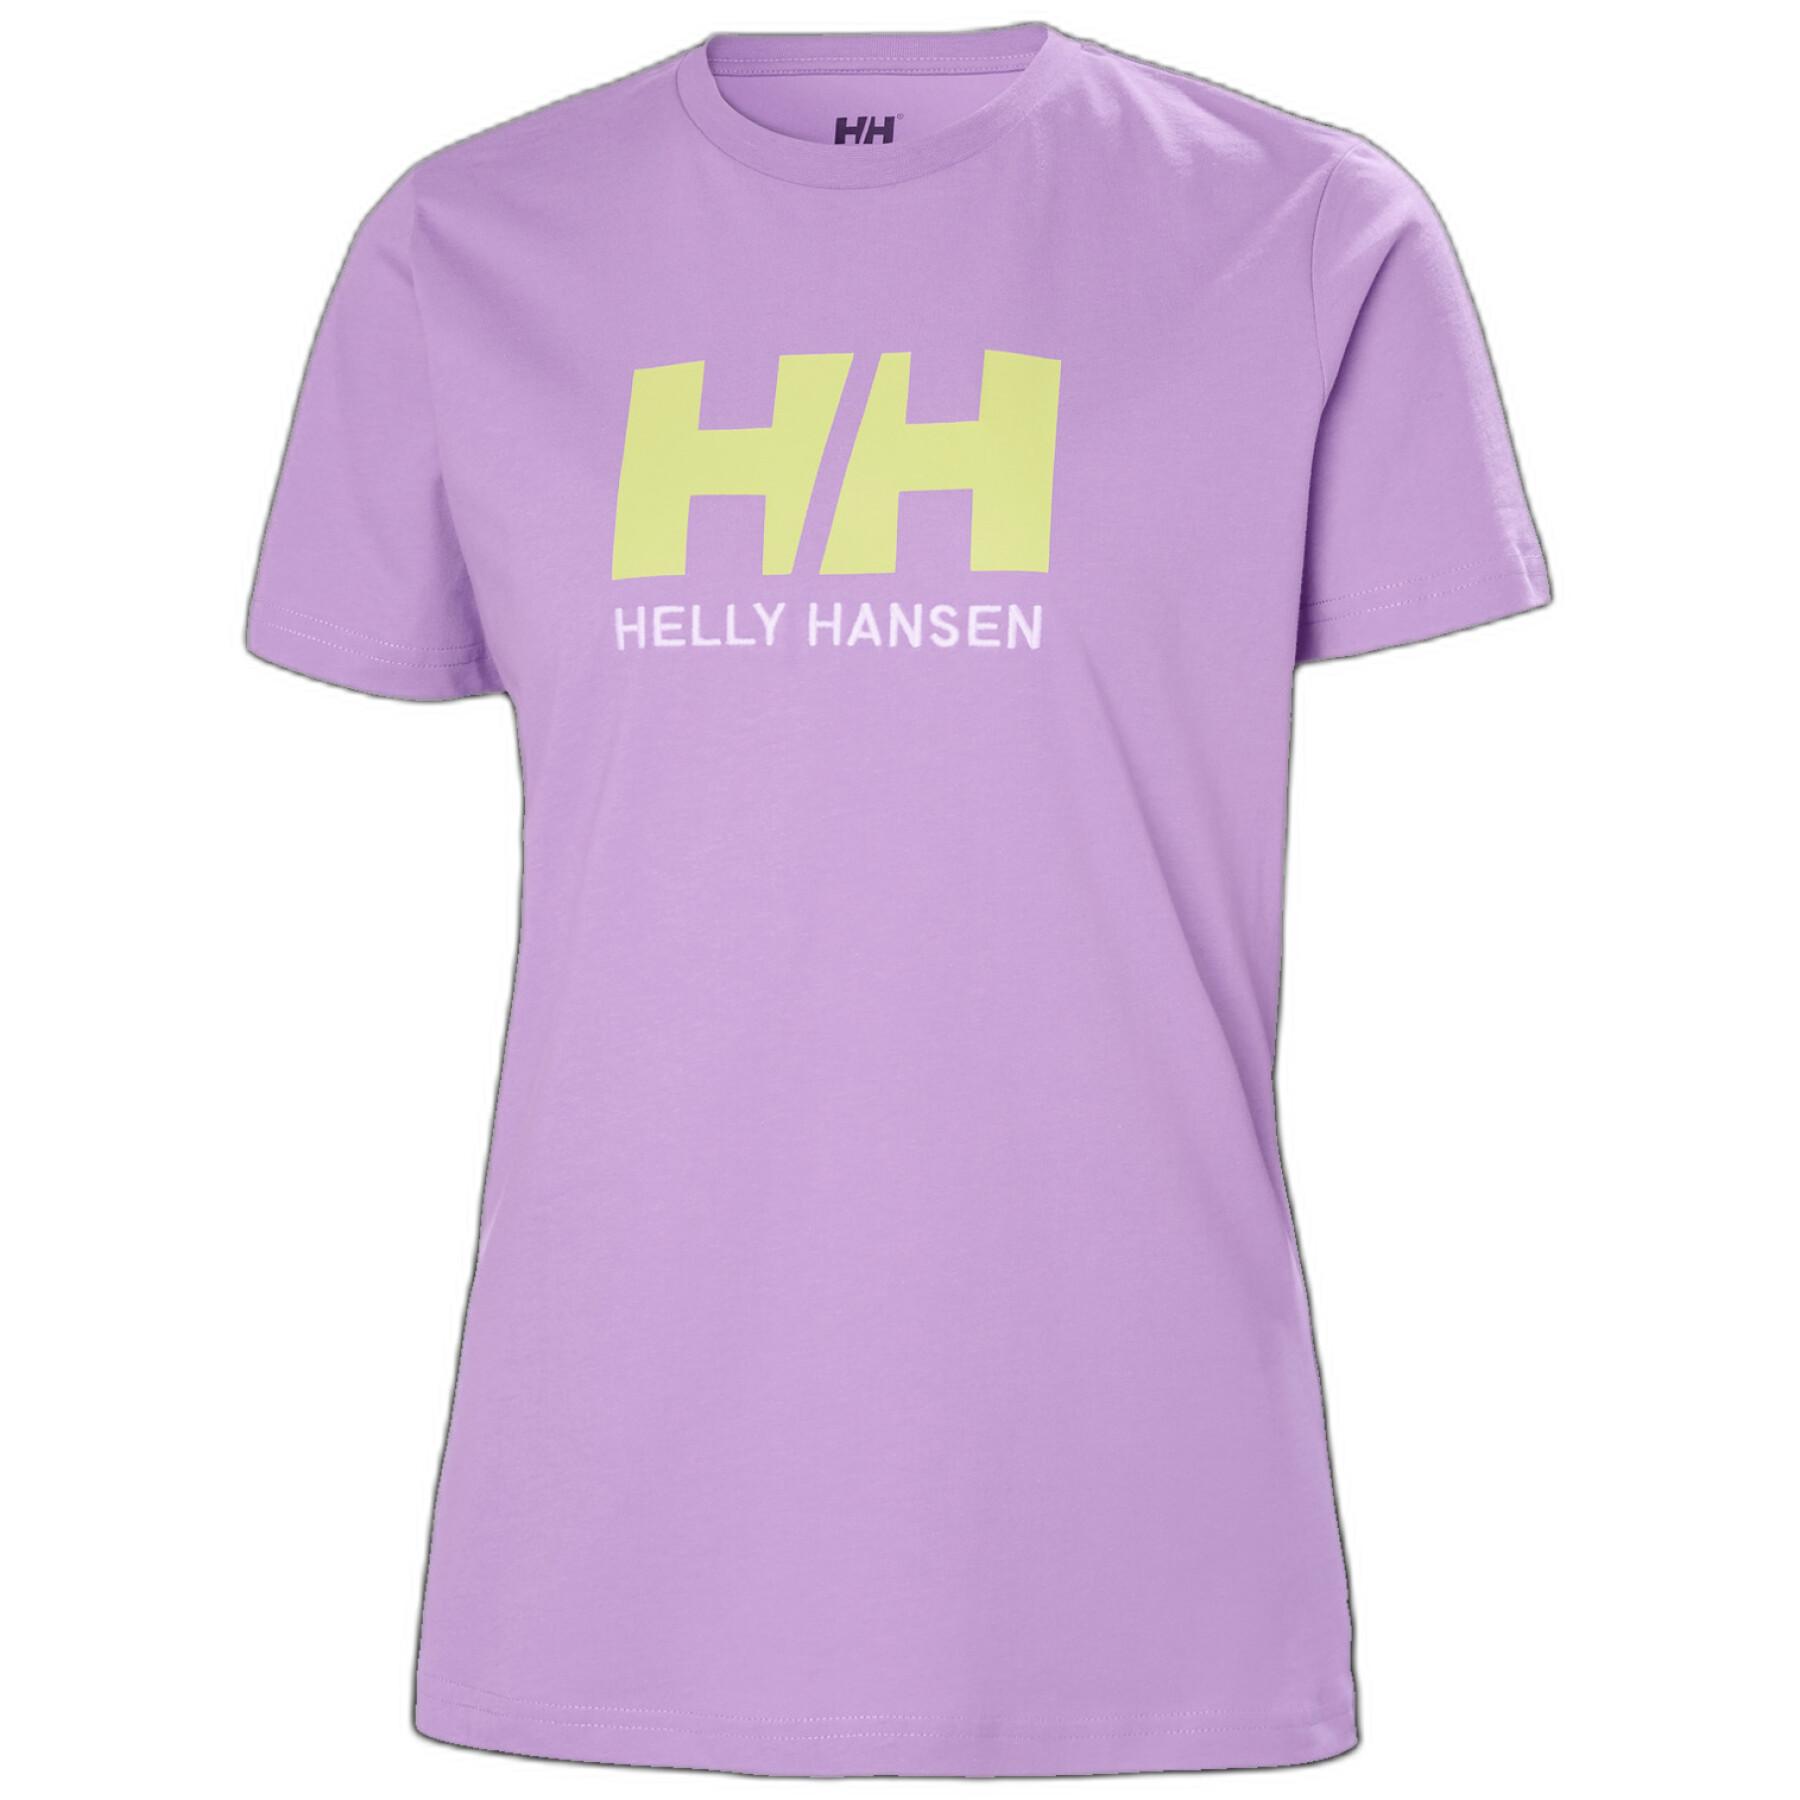 T-shirt da donna con logo Helly Hansen